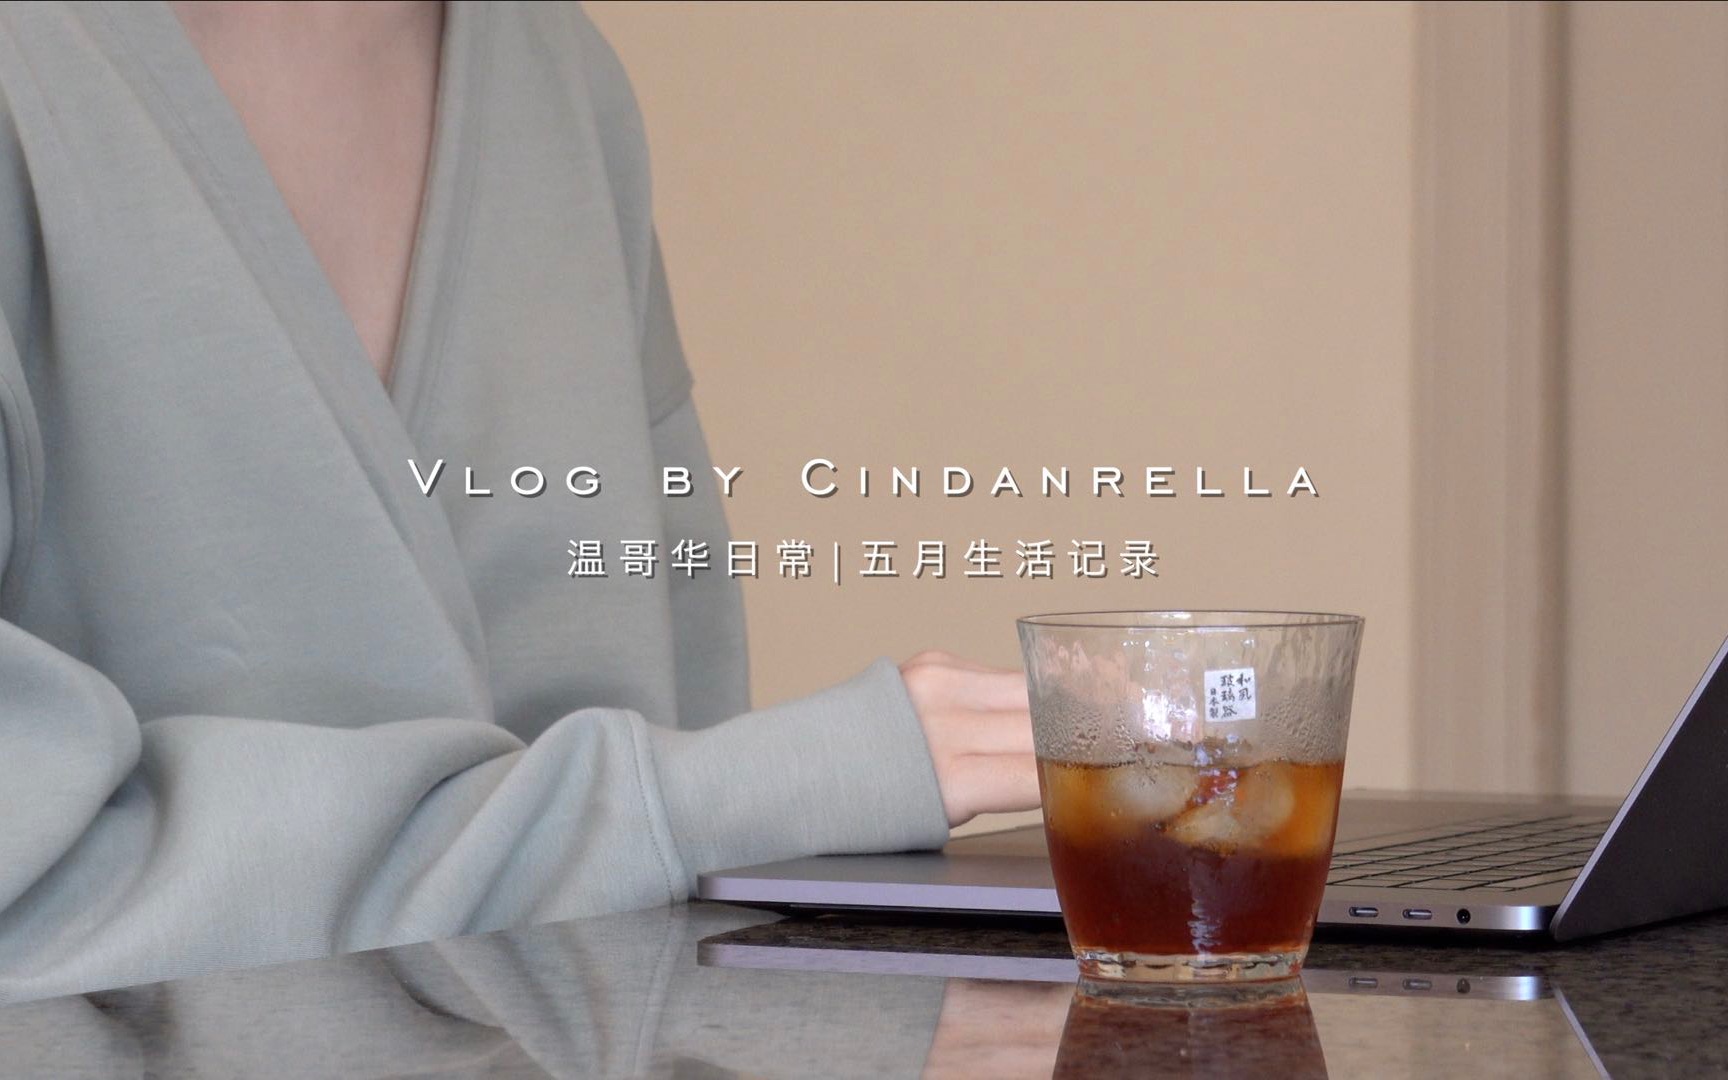 Vlog | 我的晨间流程 | 蜂蜜苹果布里奶酪开放三明治 | 牛油果鸡蛋三明治 | 咖啡 | 冷泡茶 | 梅子气泡酒 | 假期日常 | Cindanrella